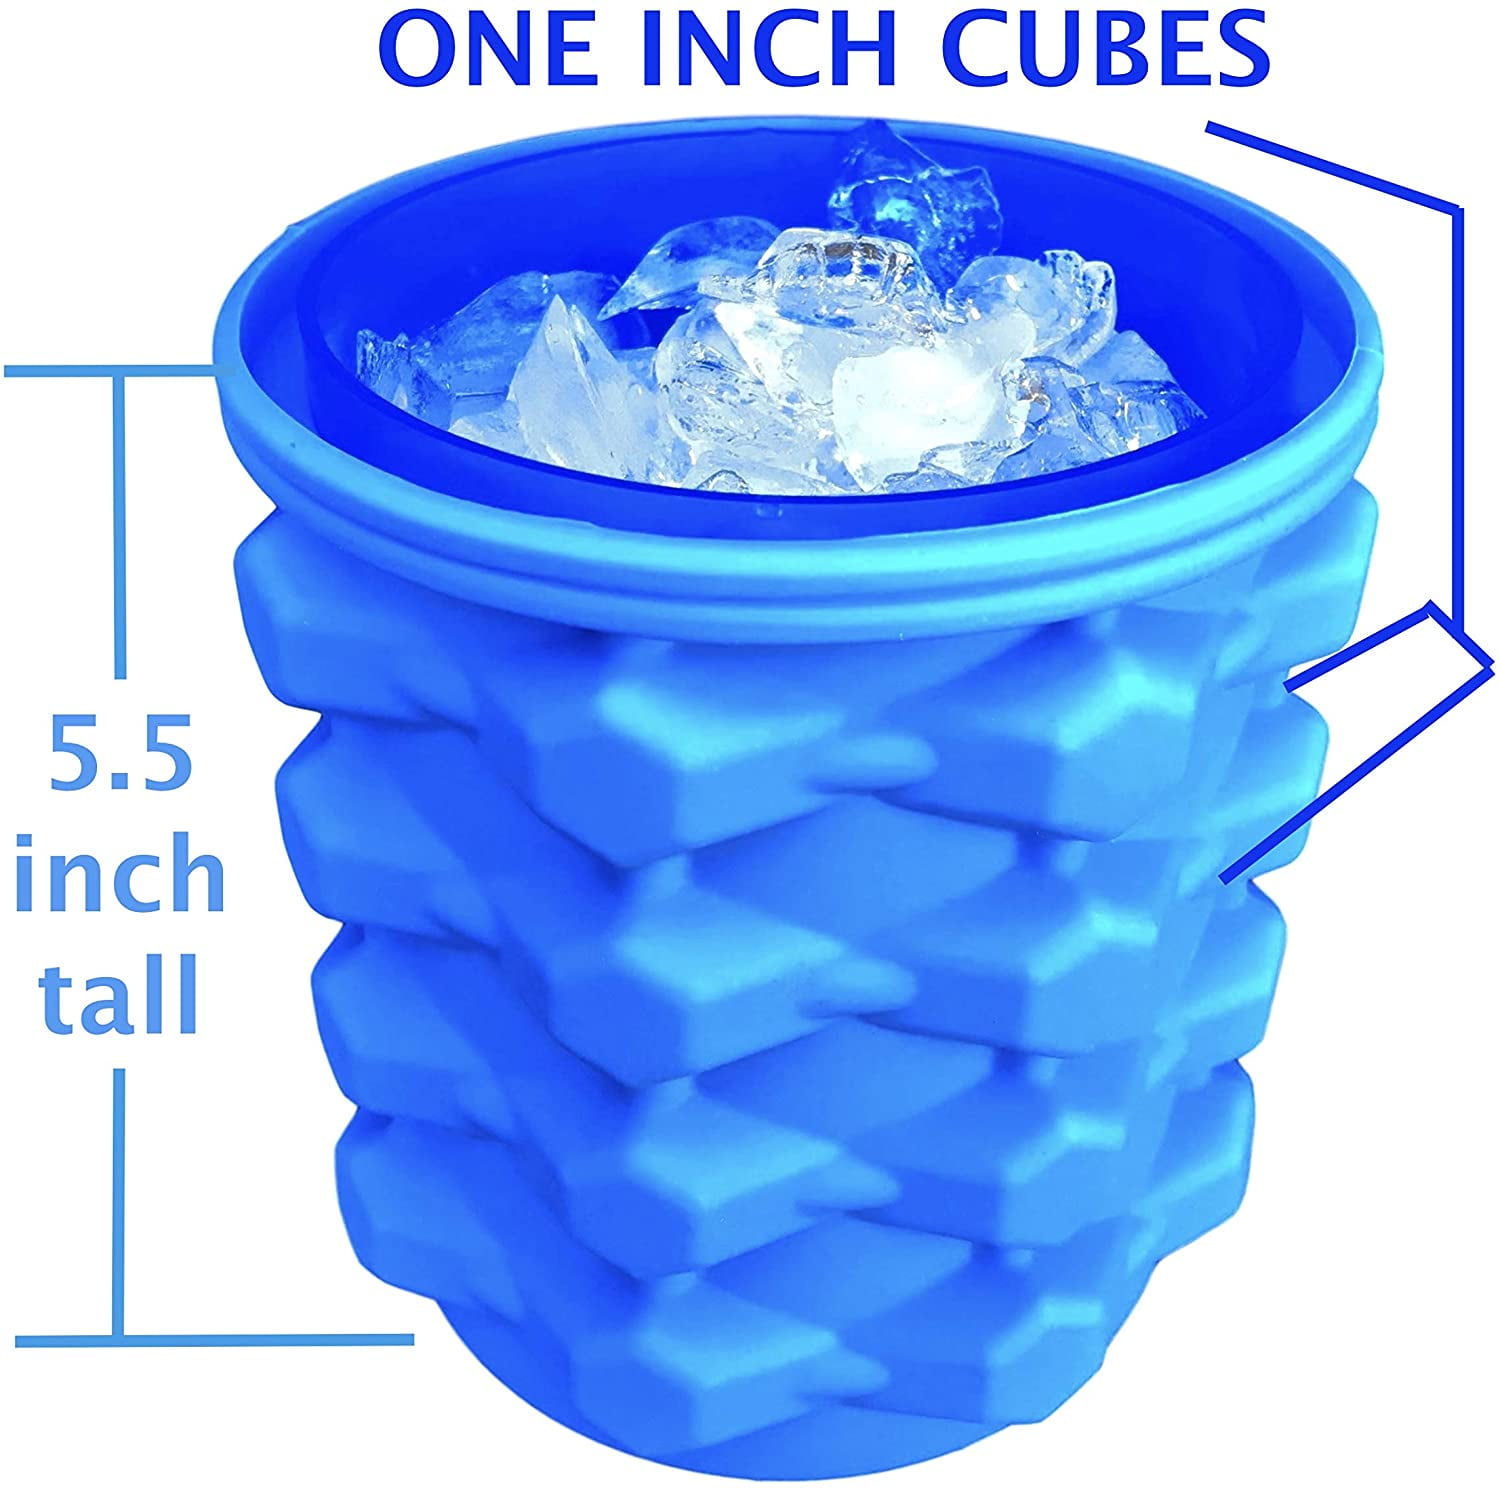 Silicosas Cubetera Hielera de Silicona Aqua Large Ice Bucket with Lid Silicone Ice Cube Tray for Freezer - BPA Free (9 Cubes)